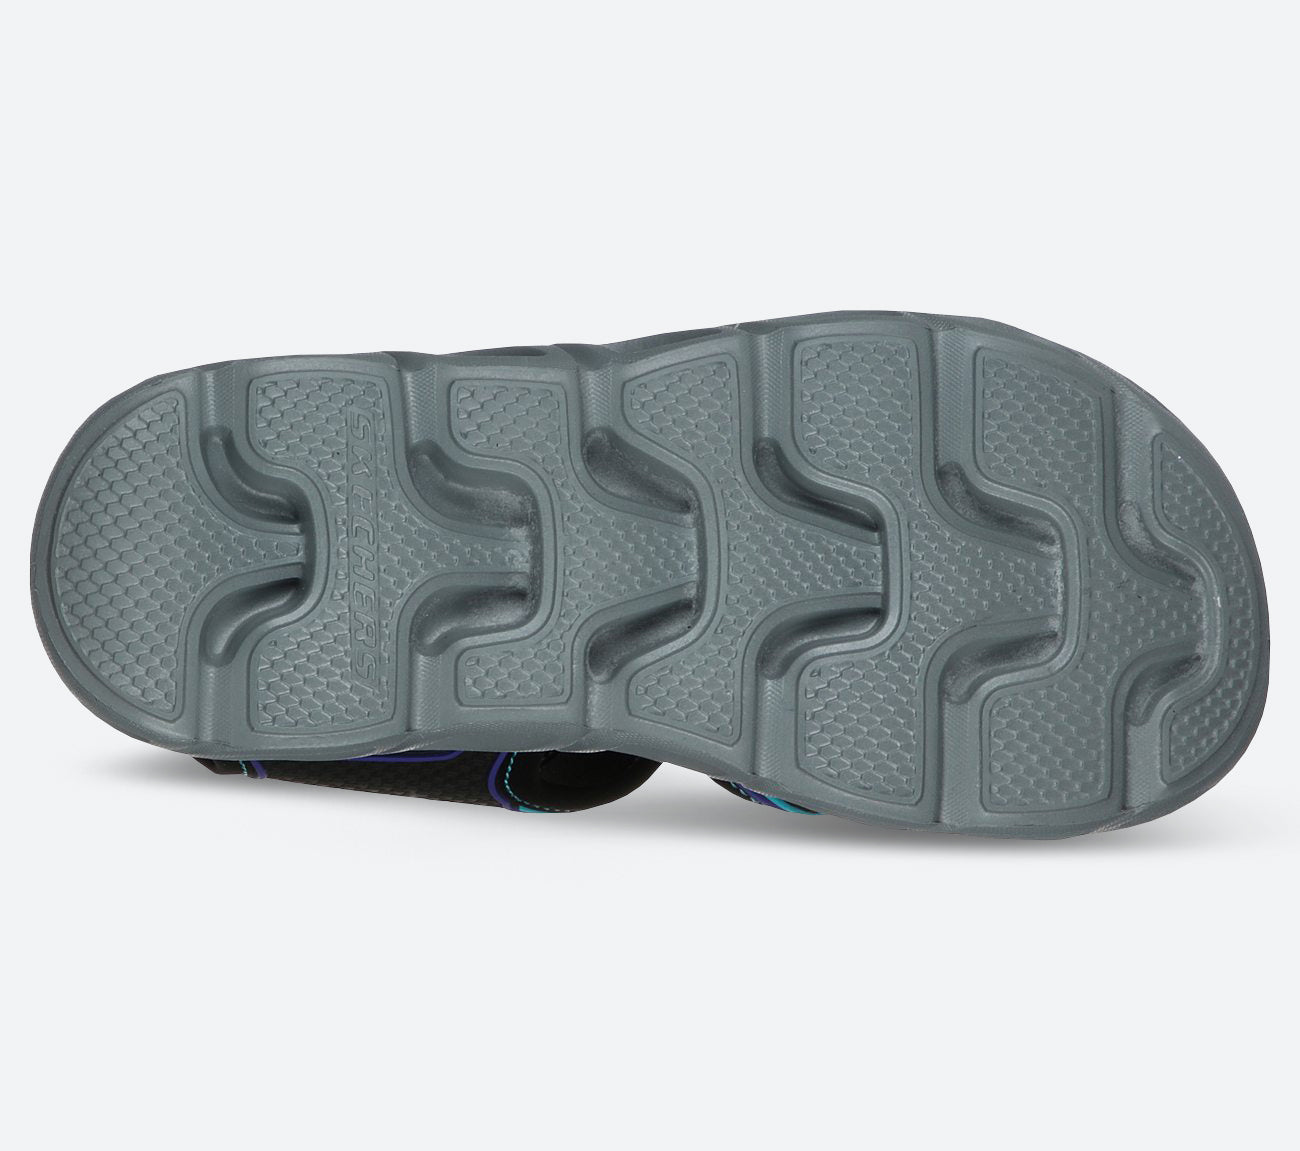 S Light - Hypno-Flash 3.0 Sandal Sandal Skechers